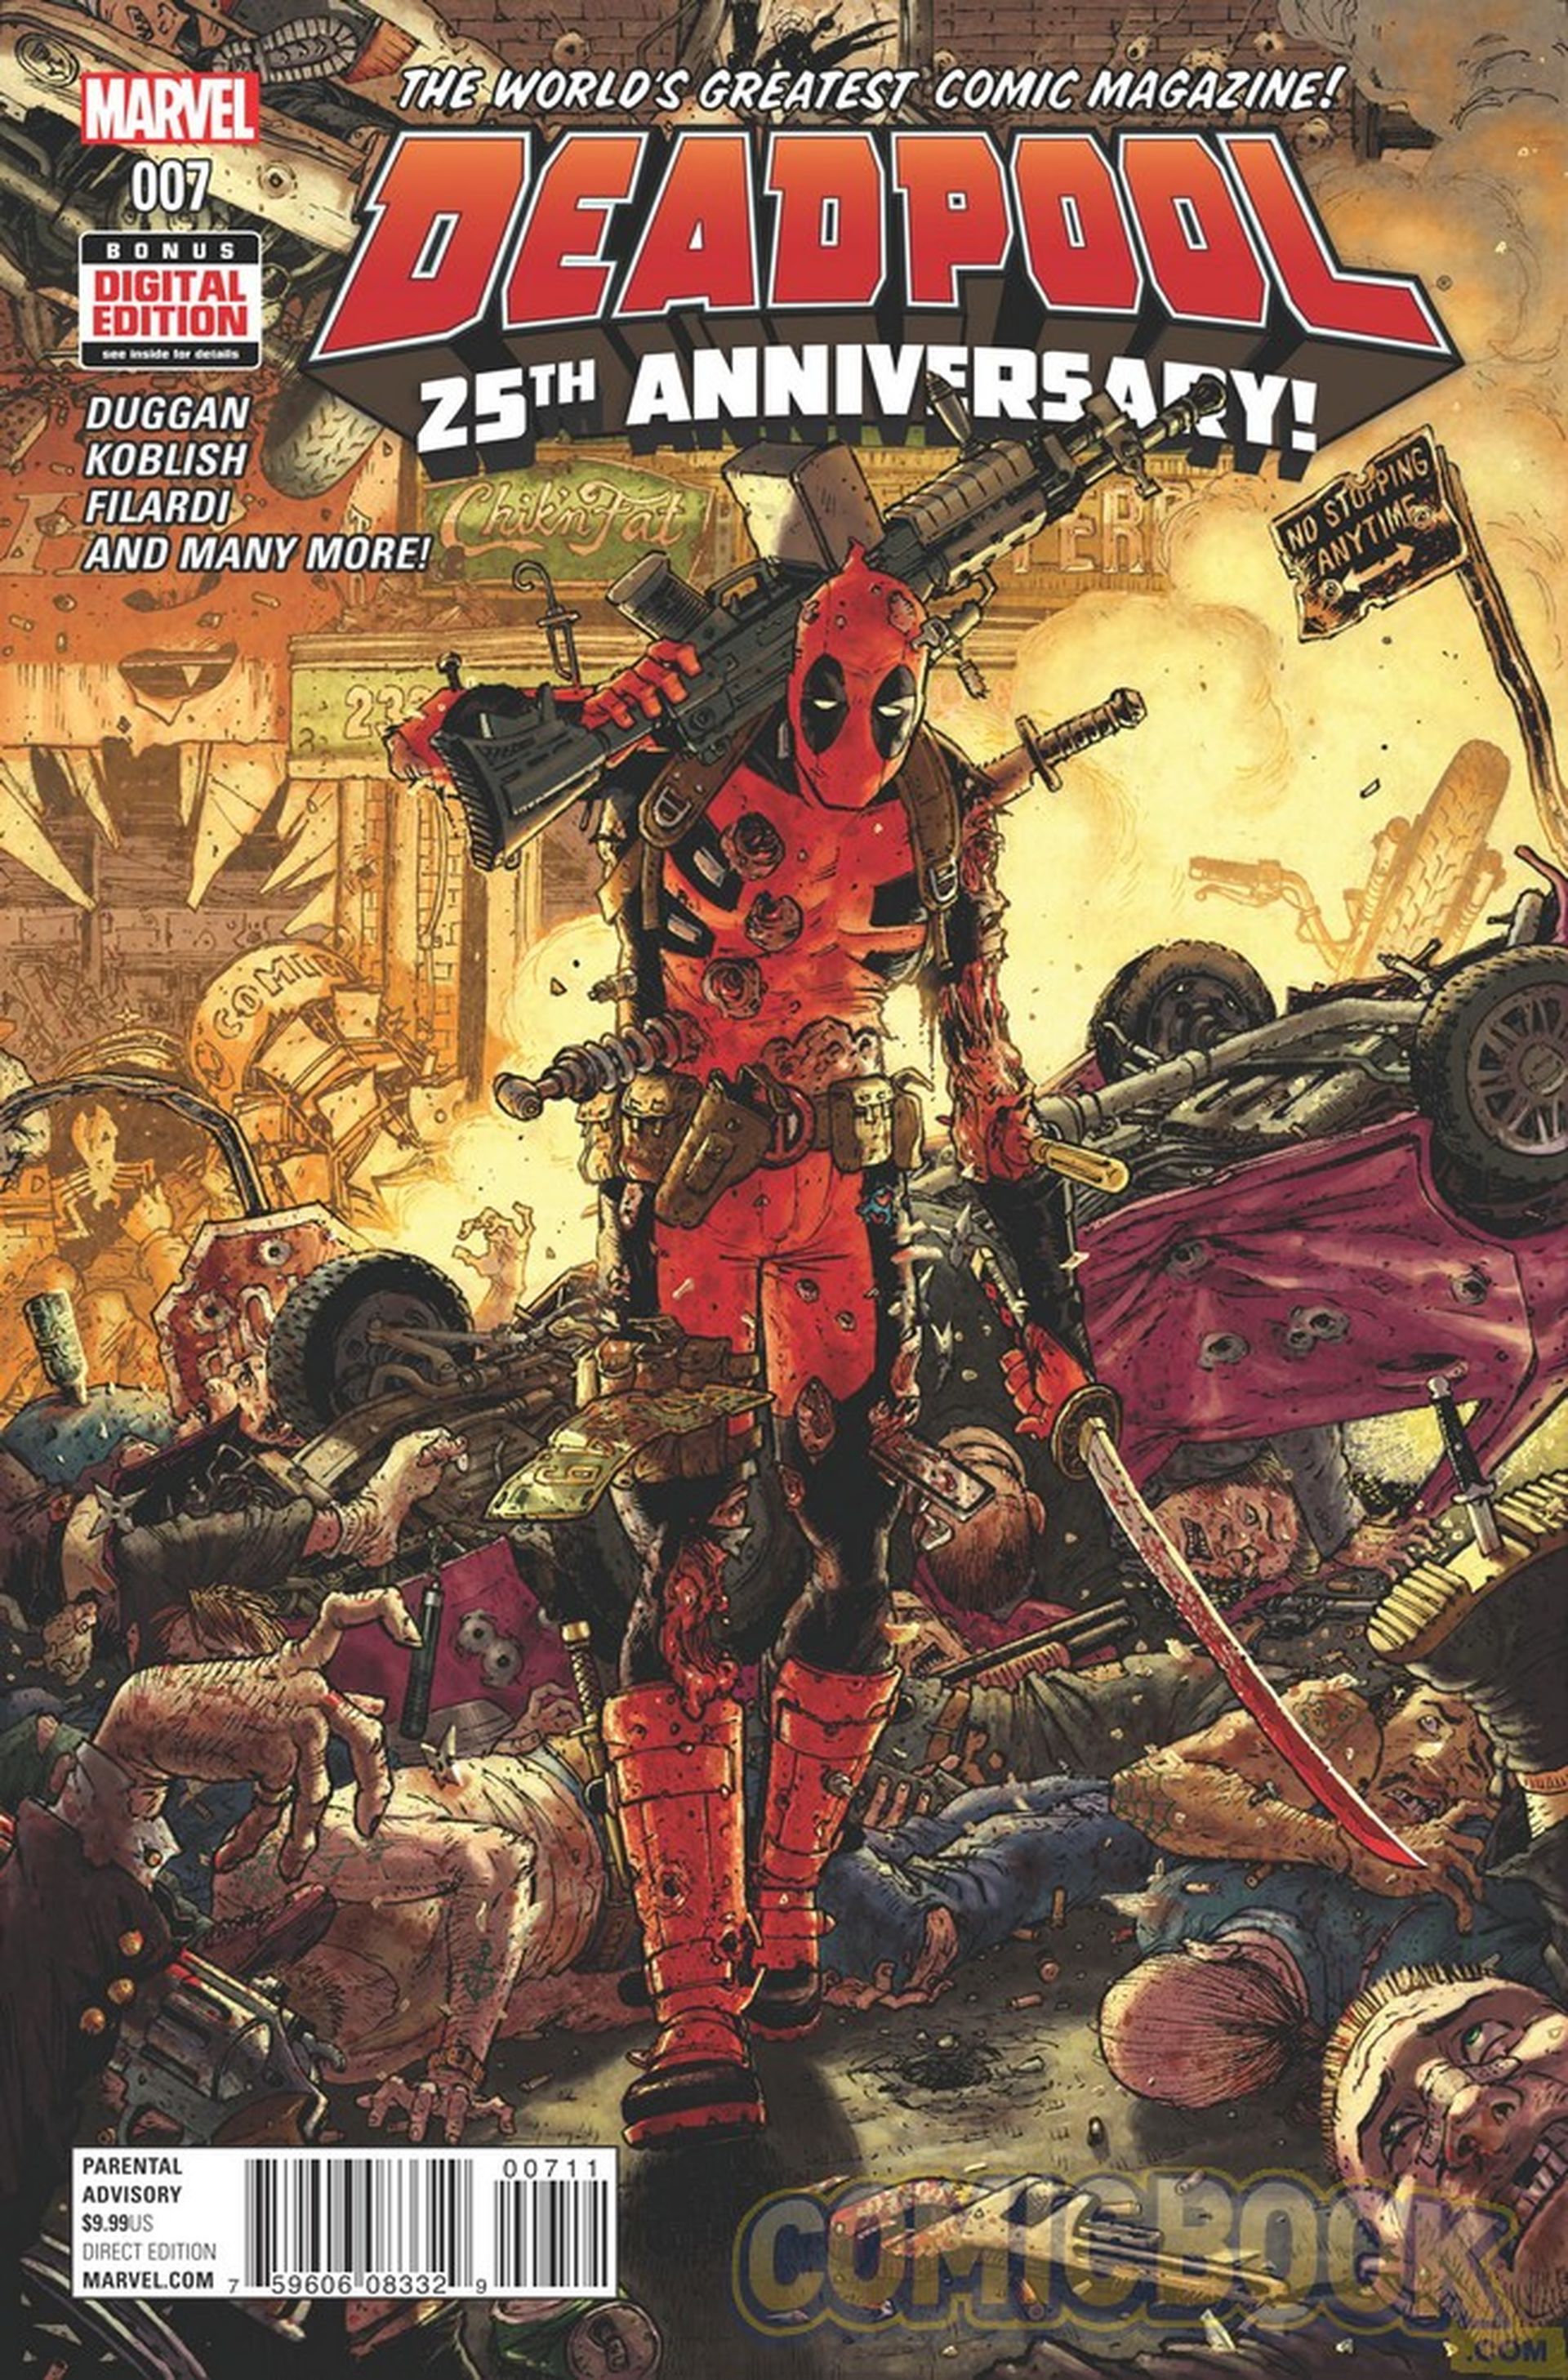 Deadpool (Masacre) celebra su 25 aniversario